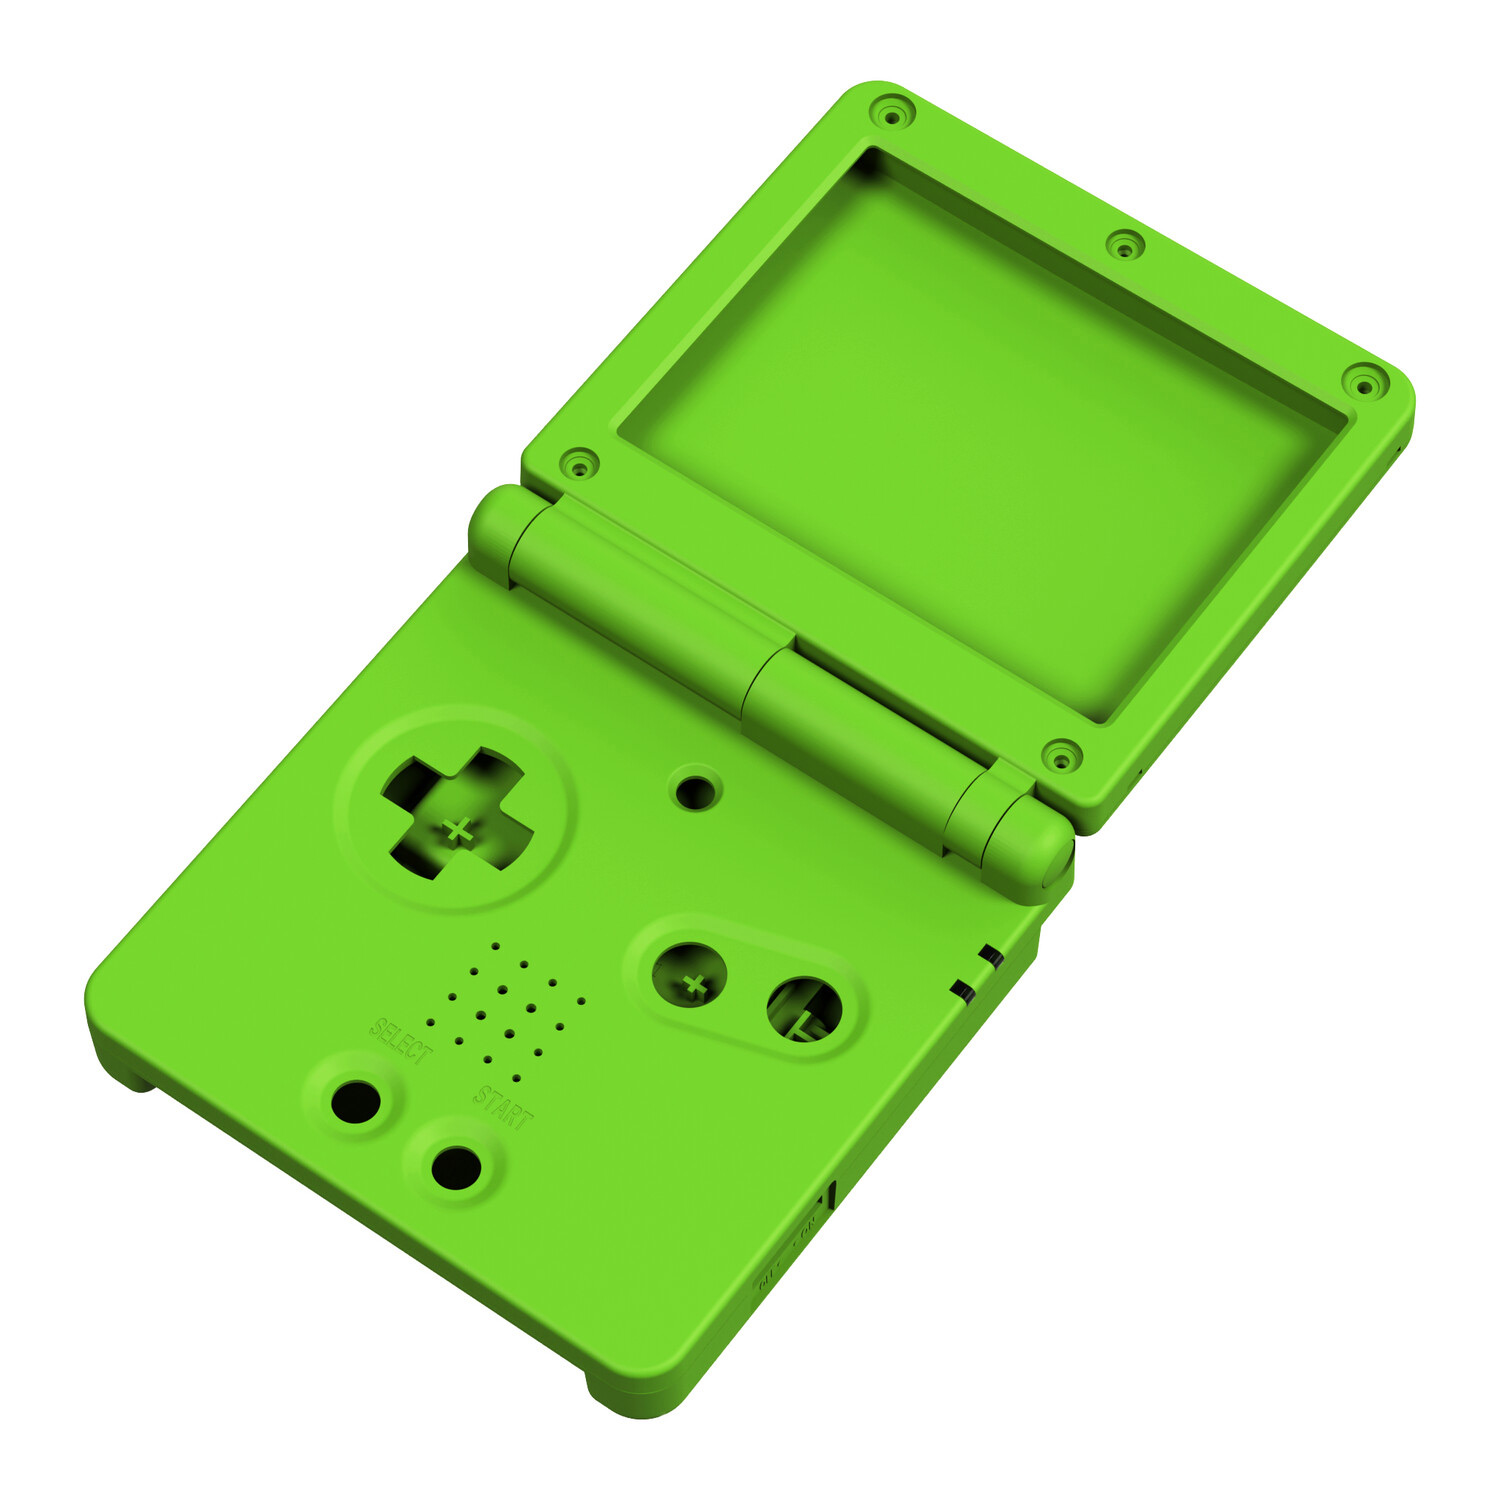 Game Boy Advance SP Etui (Stevig Groen)